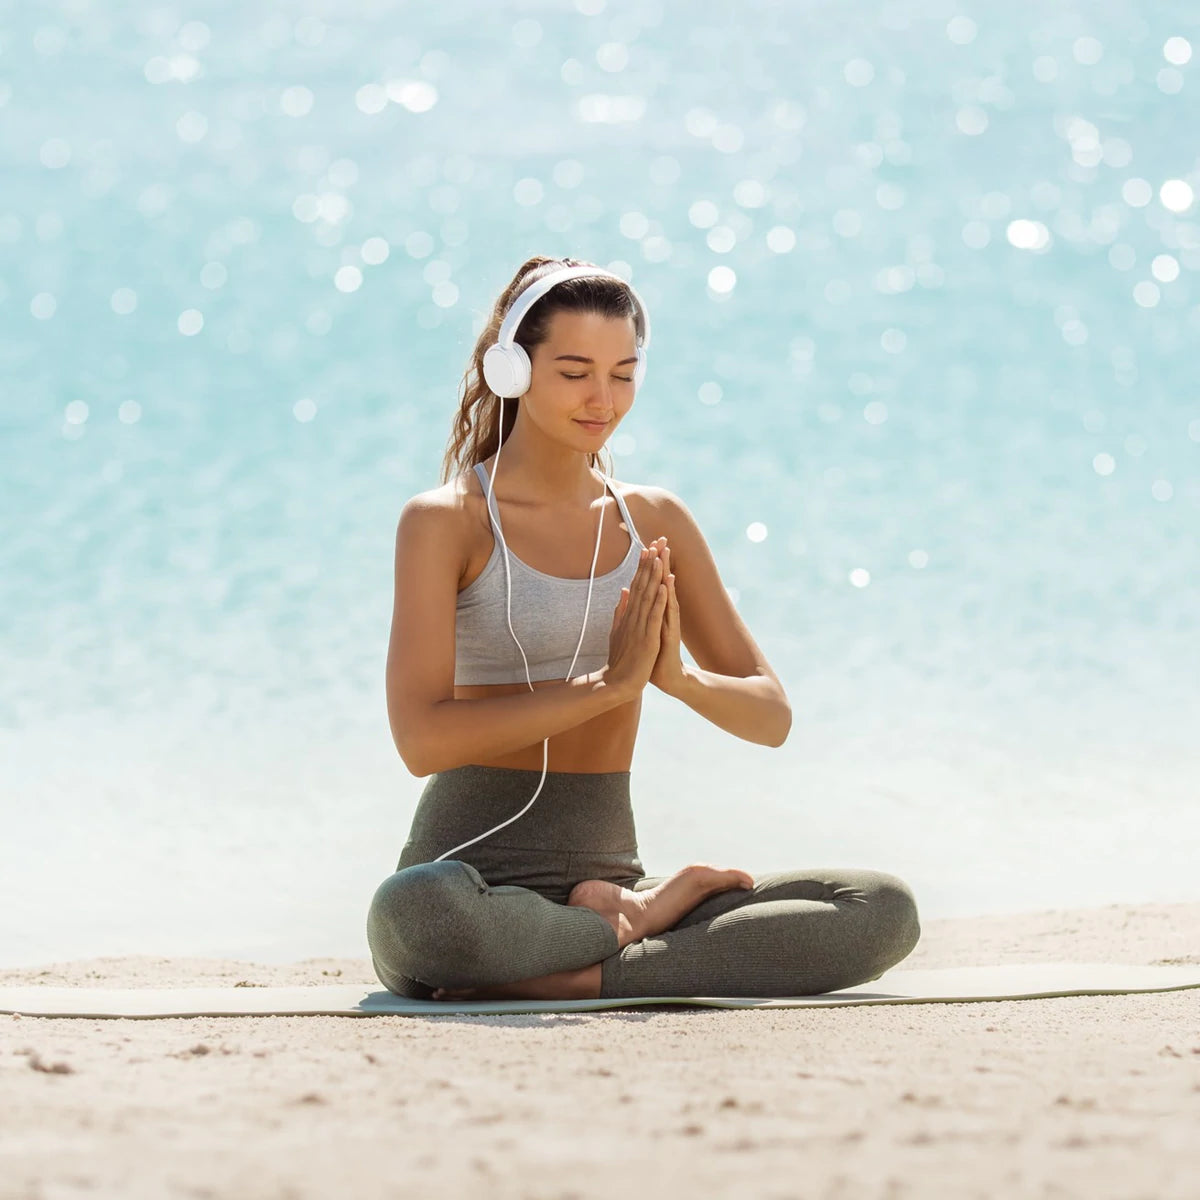 Lady practicing yoga on a beach, wearing headphones performing the yoga posture ardha padmasana, the half lotus pose